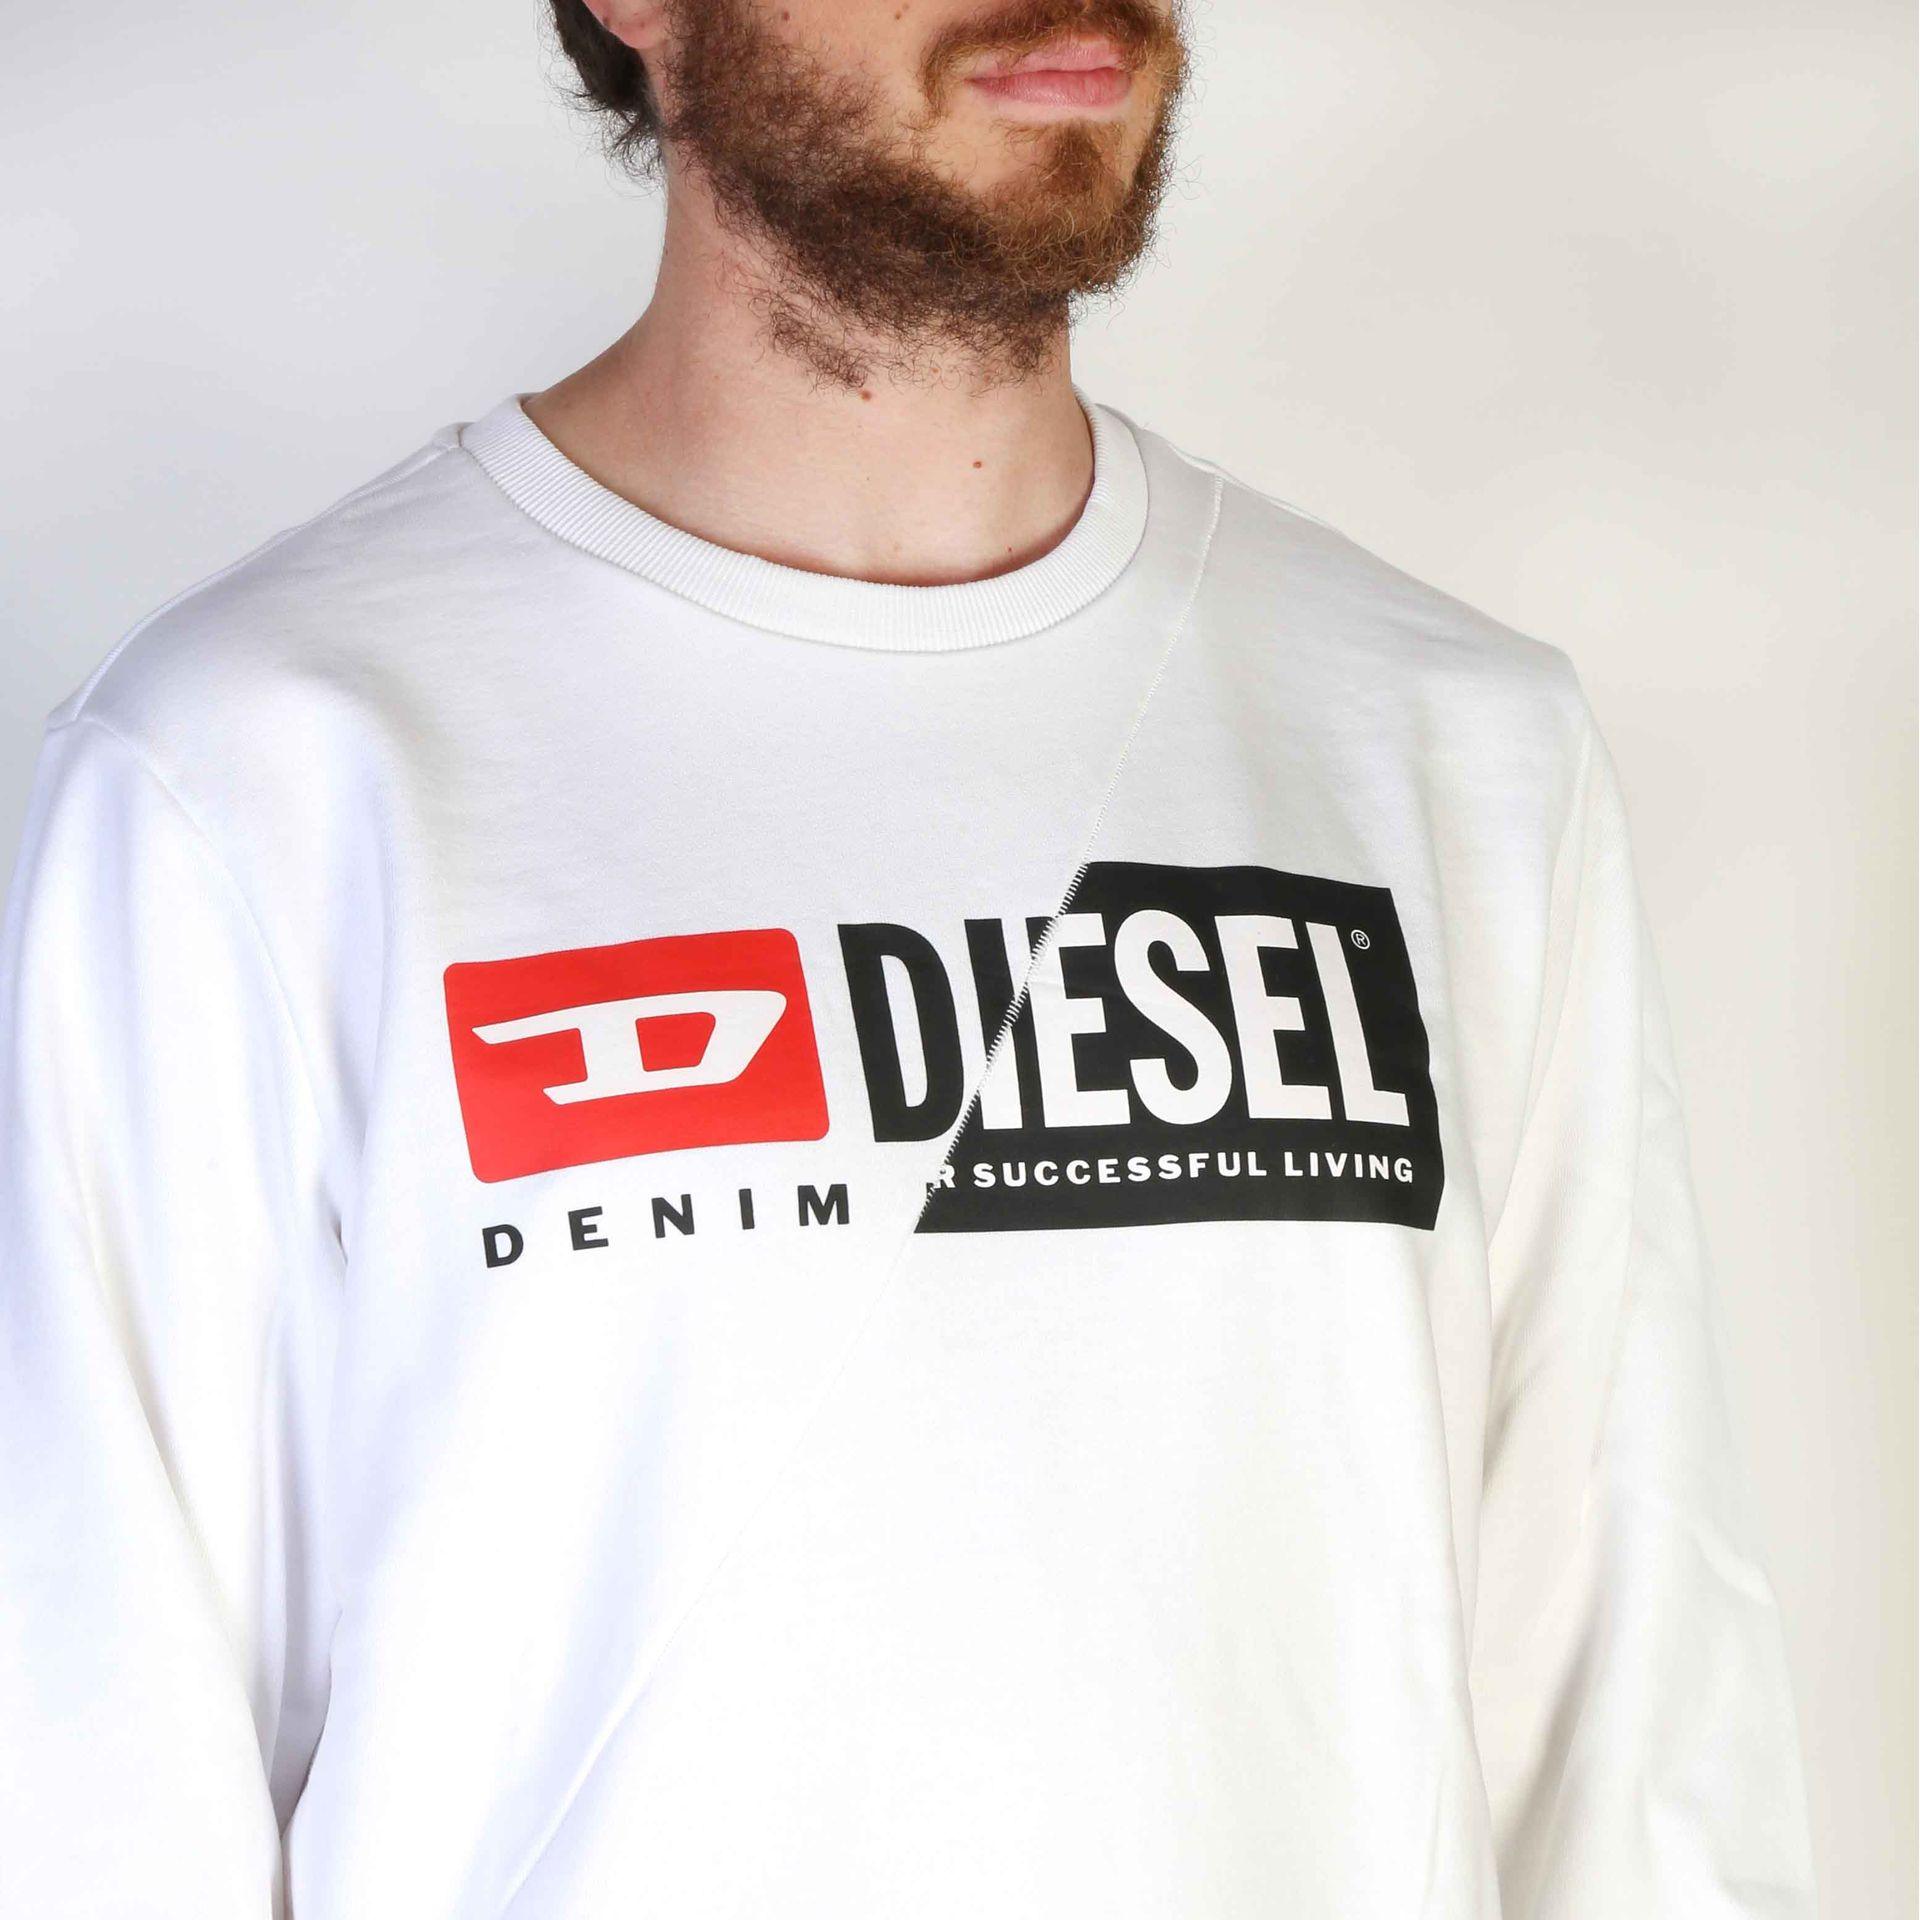 Diesel Men Sweatshirts - Sweatshirts - Guocali